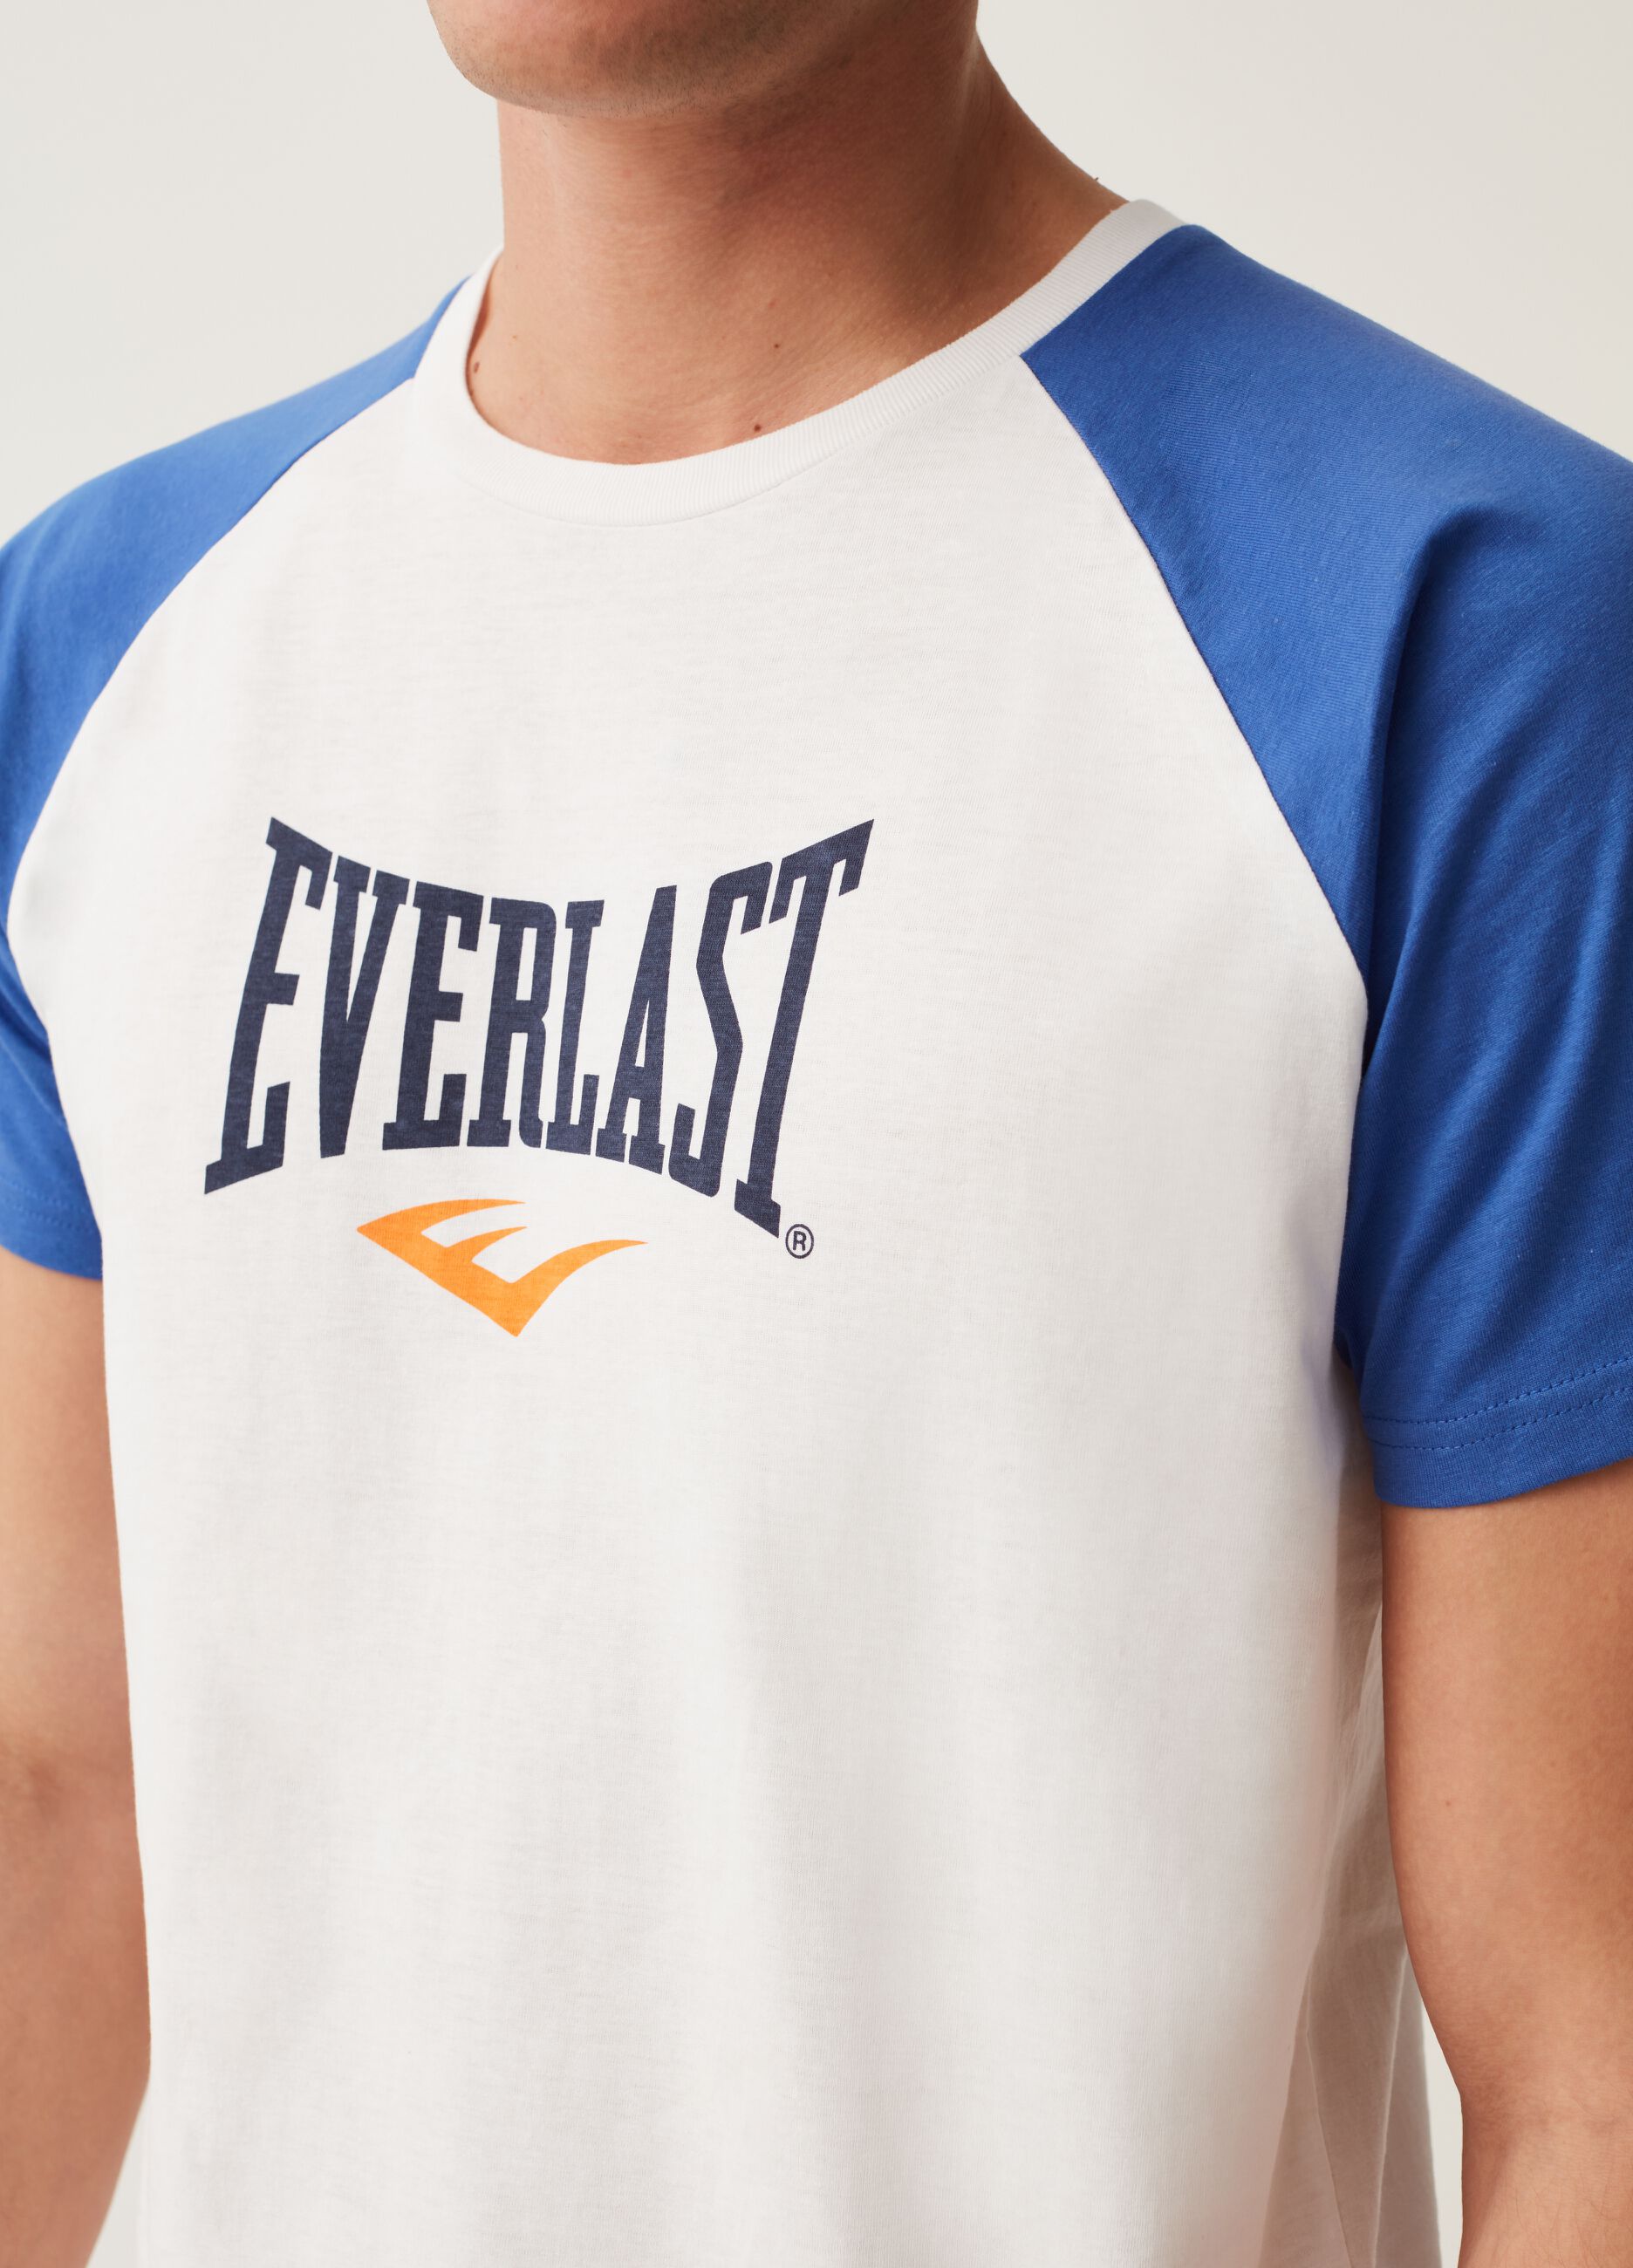 Everlast print T-shirt with raglan sleeves